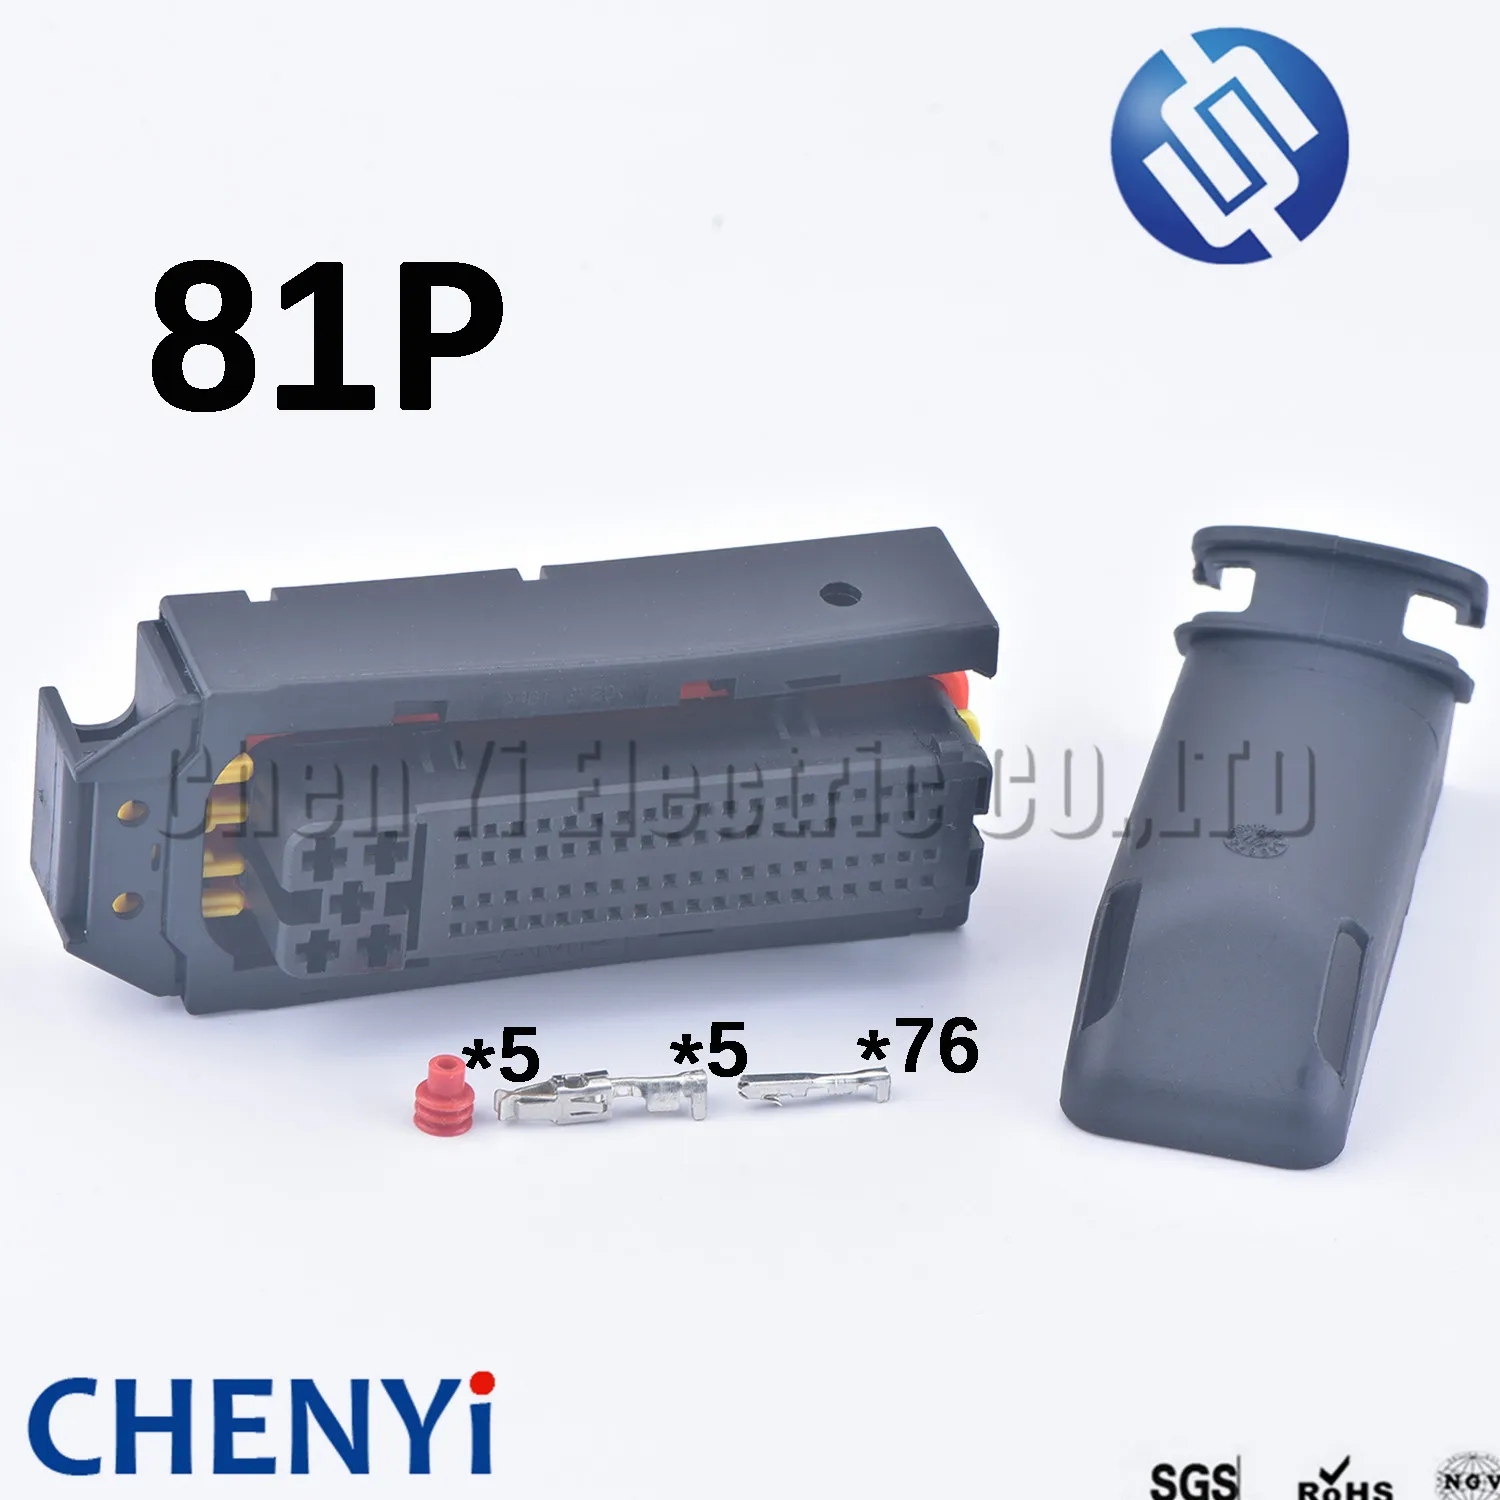 AMP 81 Pin Waterproof ECU Automotive Connector 1813712-6 Car Electrical PCB Socket Female Plug 9-368290-1 For Hyundai Elantra